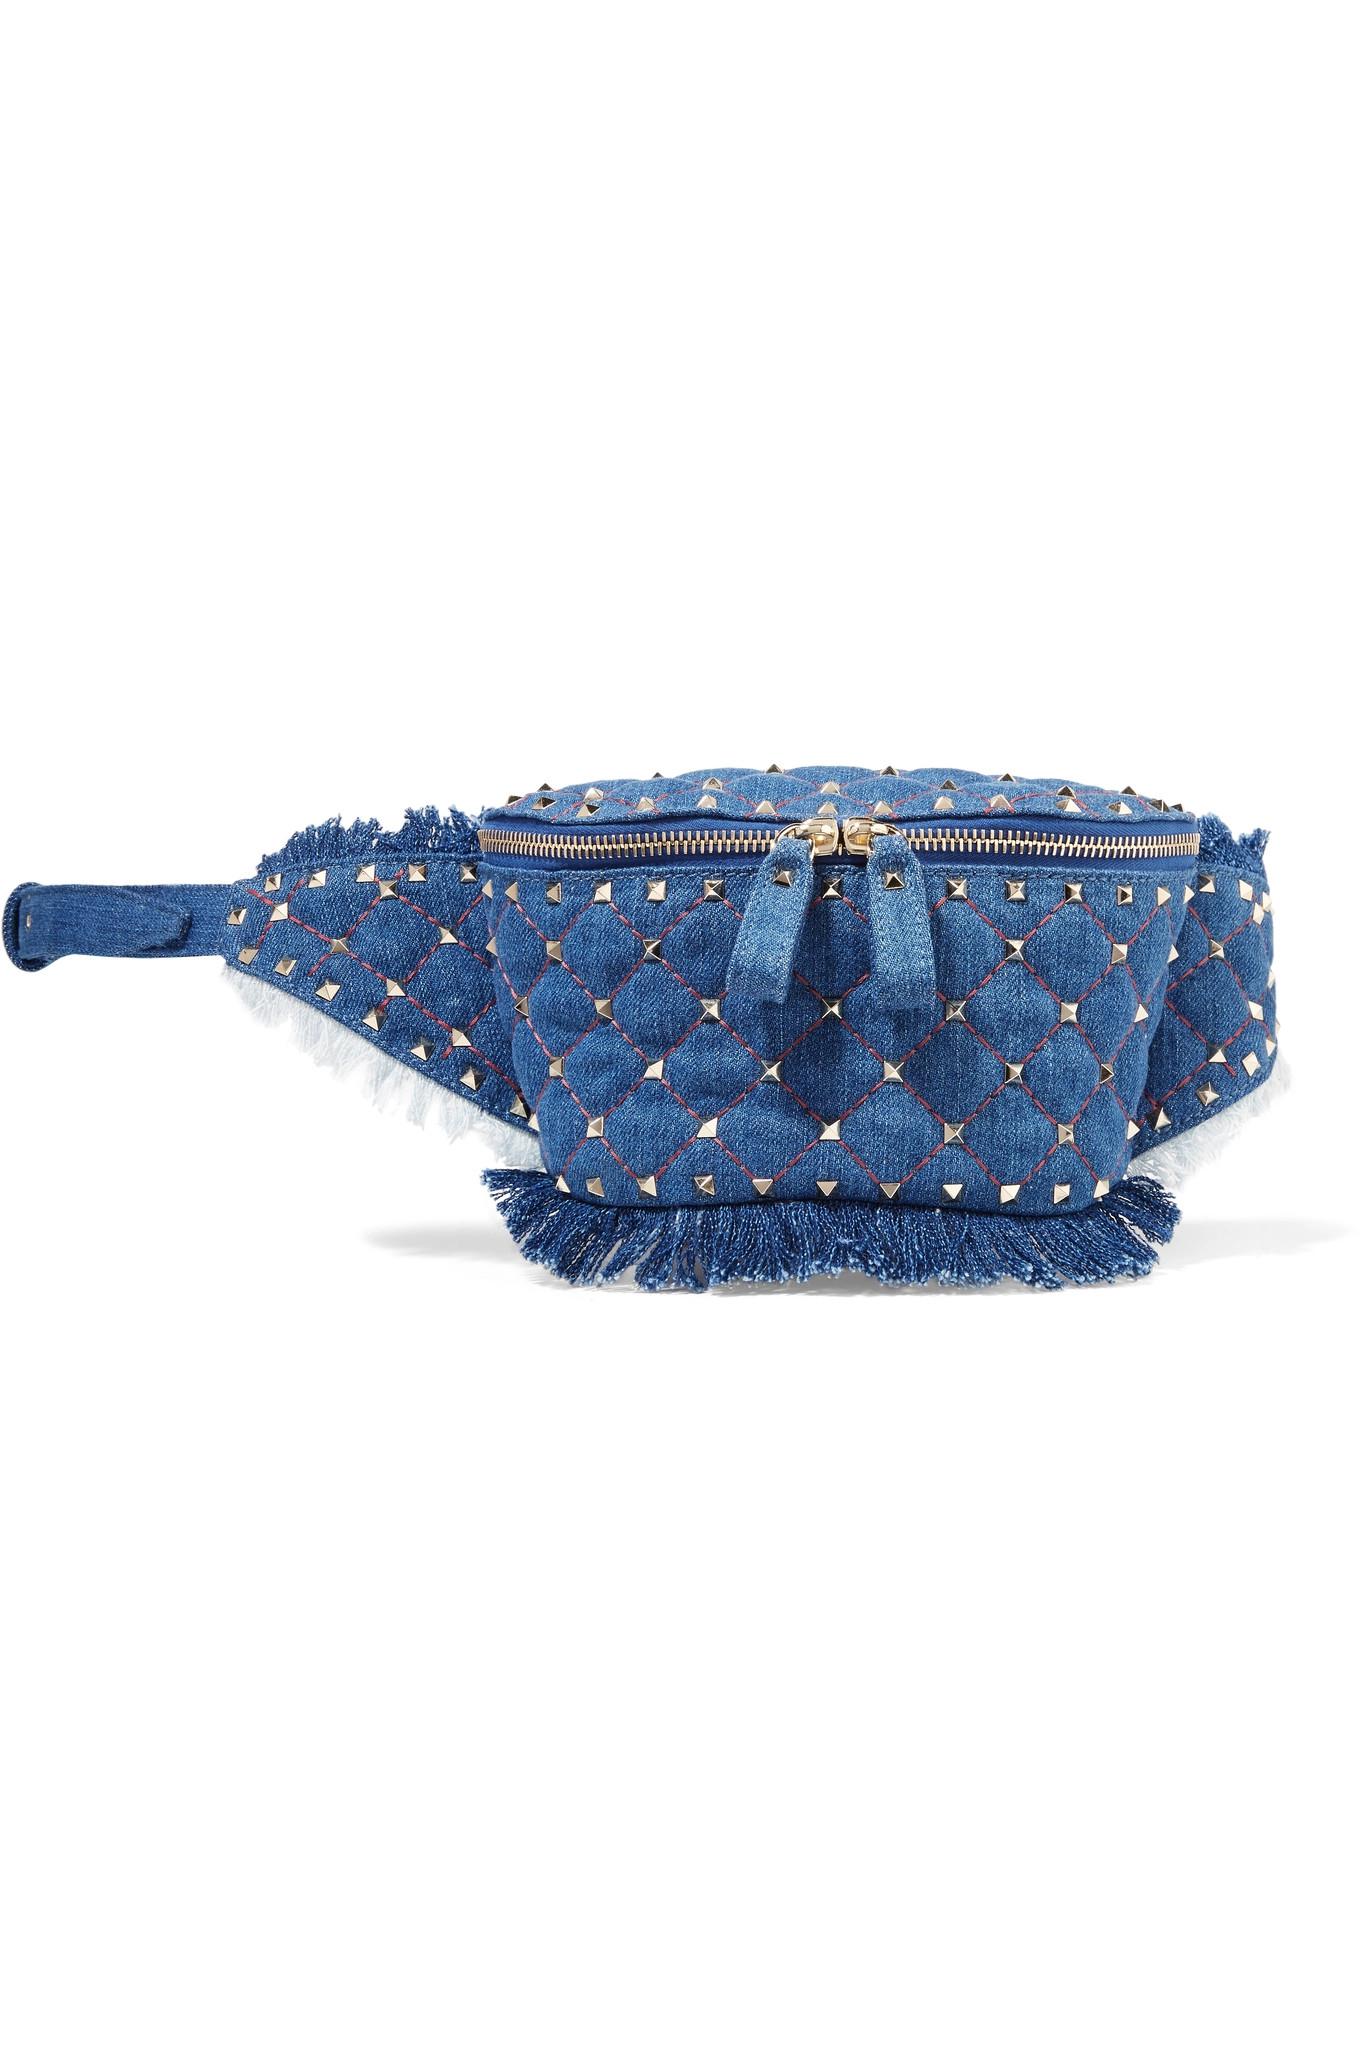 Valentino Rockstud Quilted Denim Belt Bag in Blue - Lyst